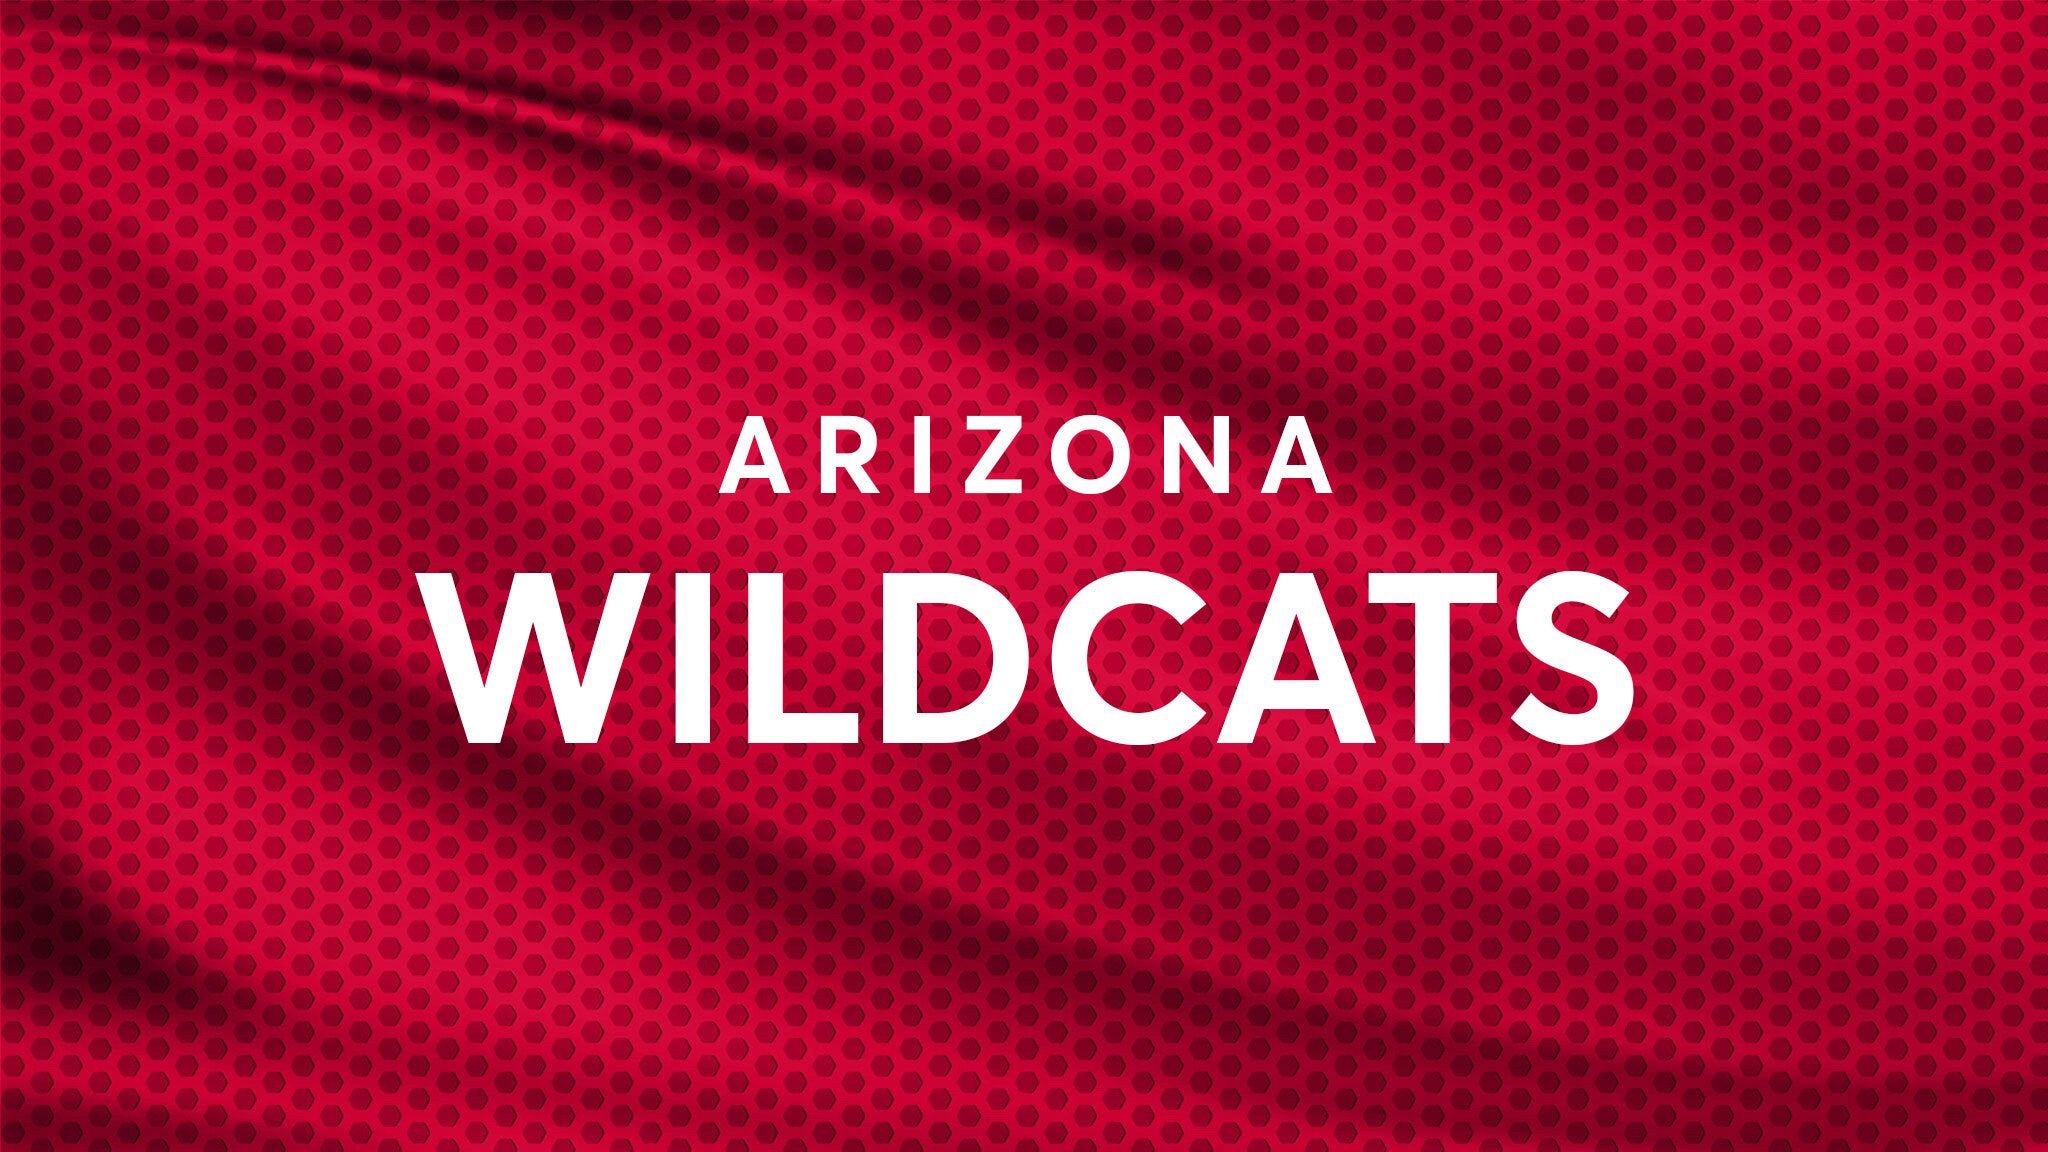 Arizona Wildcats Football vs. Northern Arizona Lumberjacks Football hero